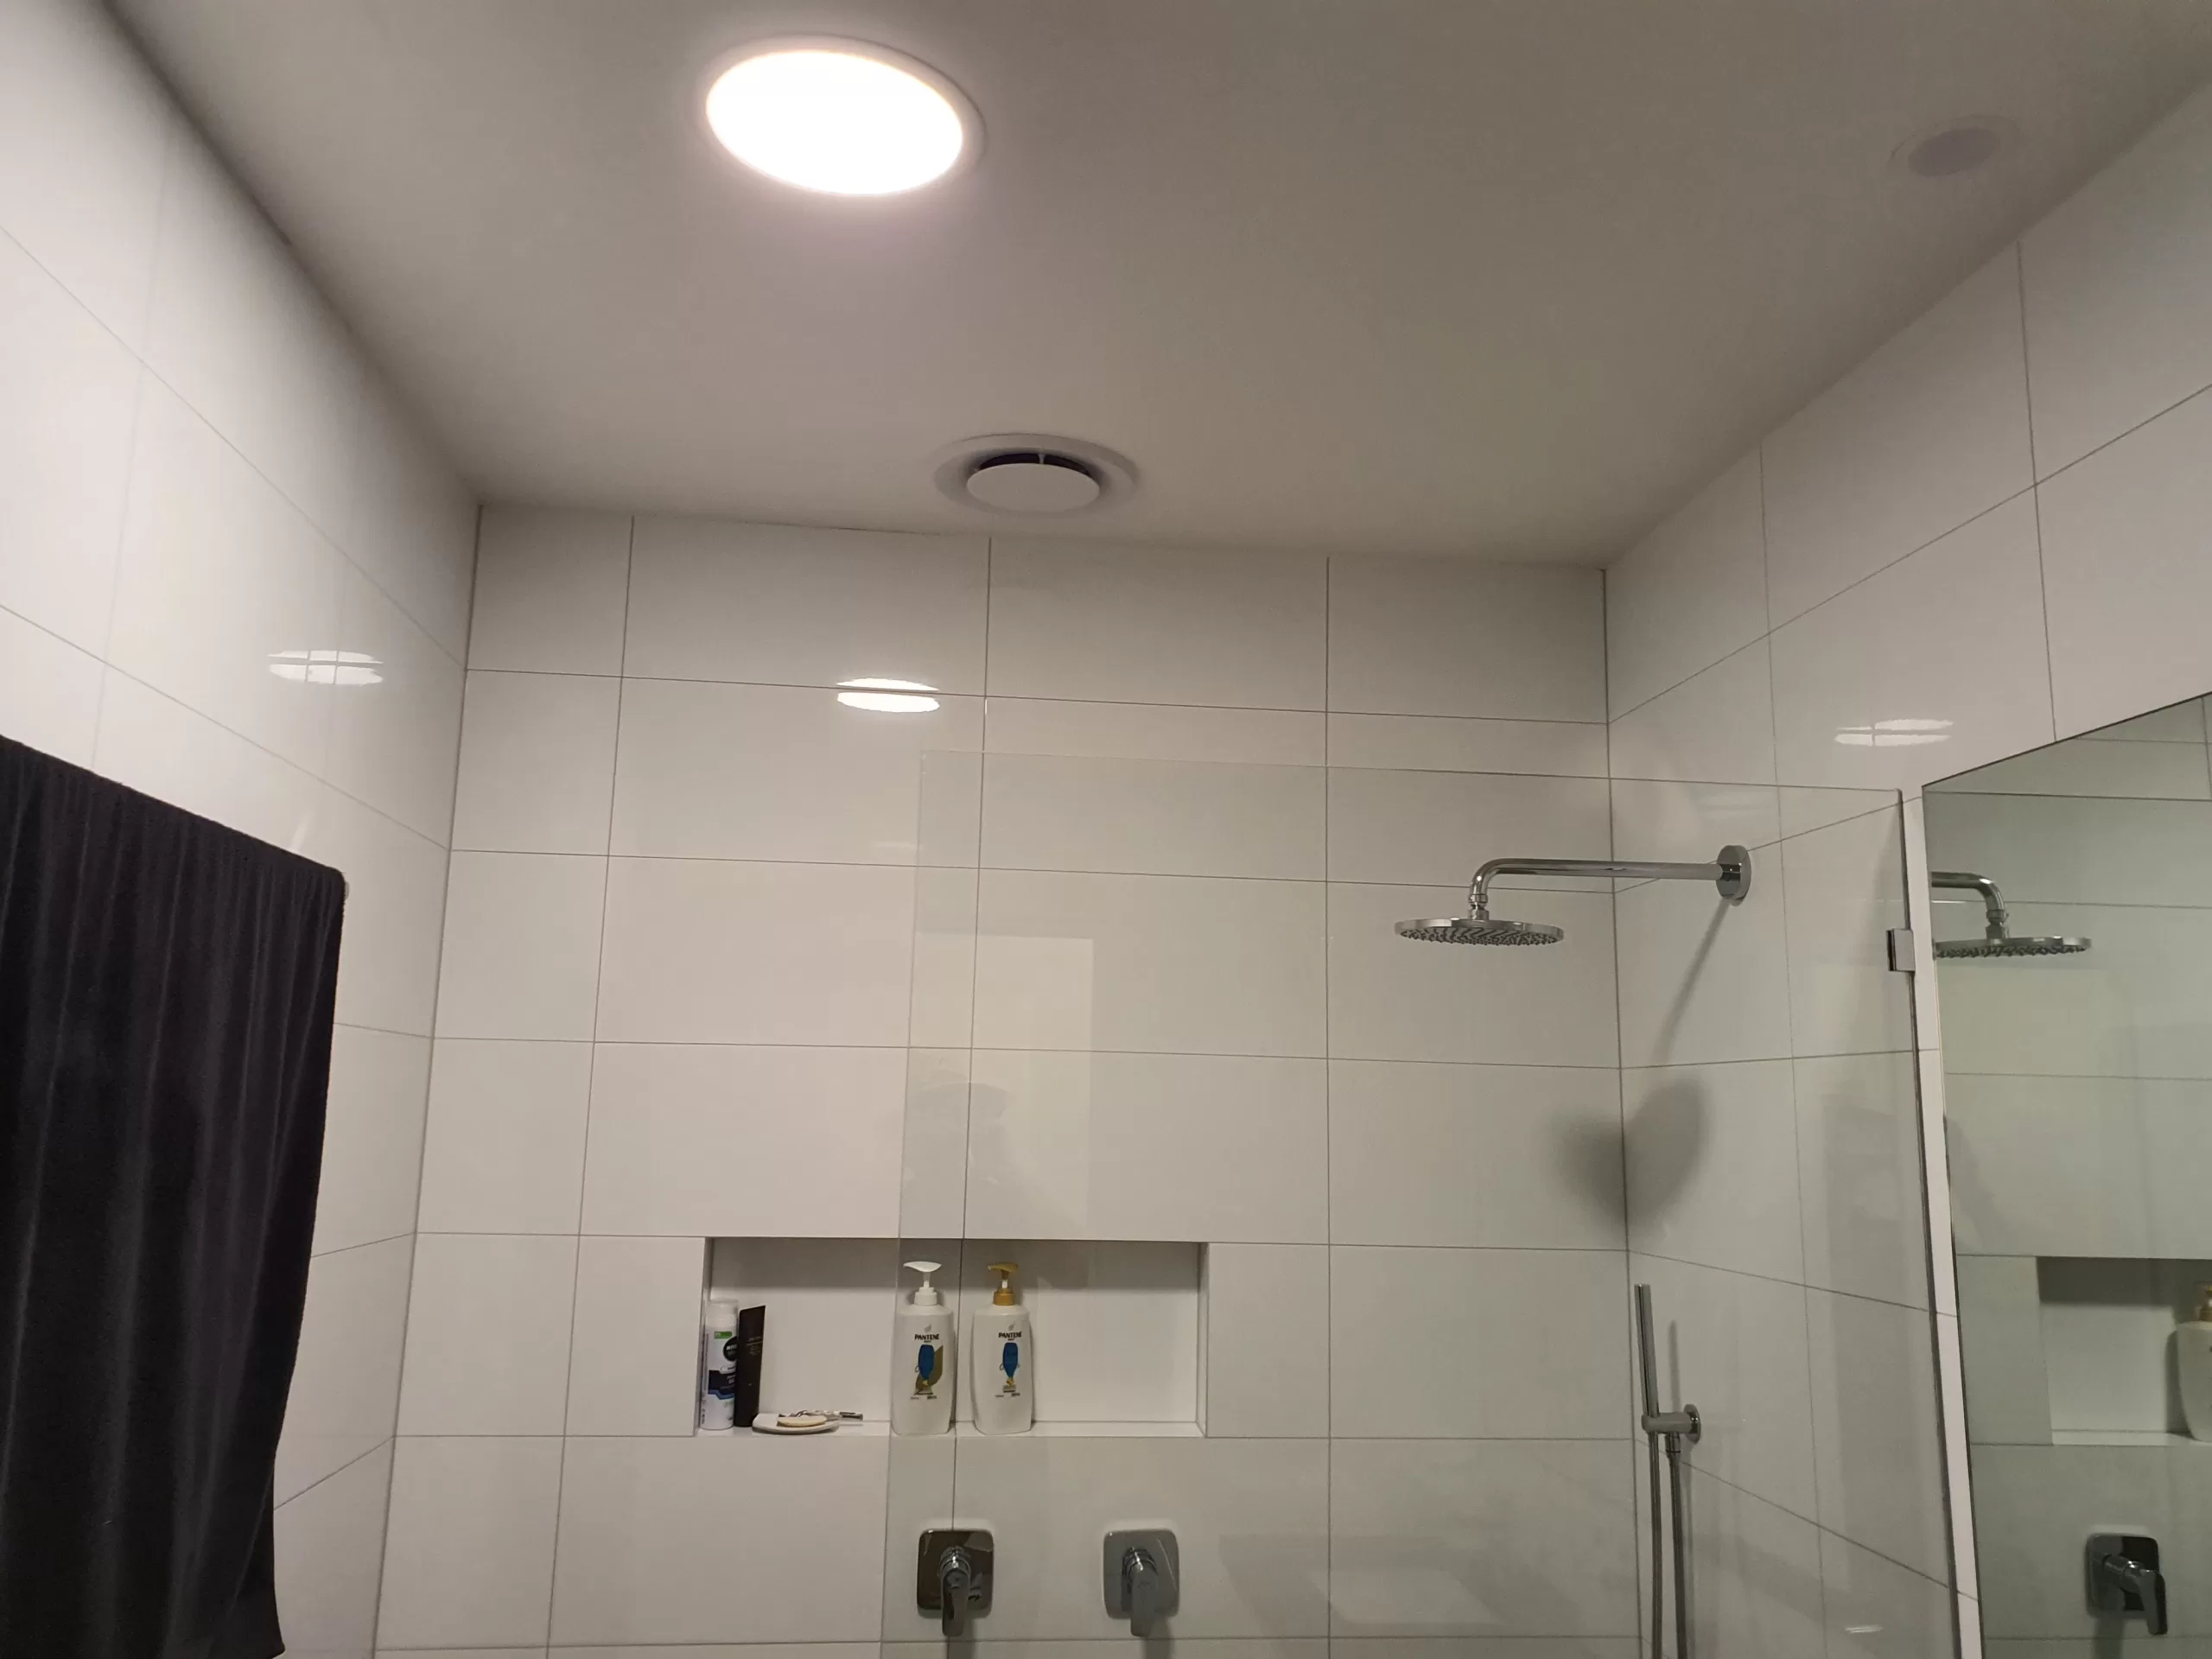 SLW3-225 - Bathroom - Peninsula install #2